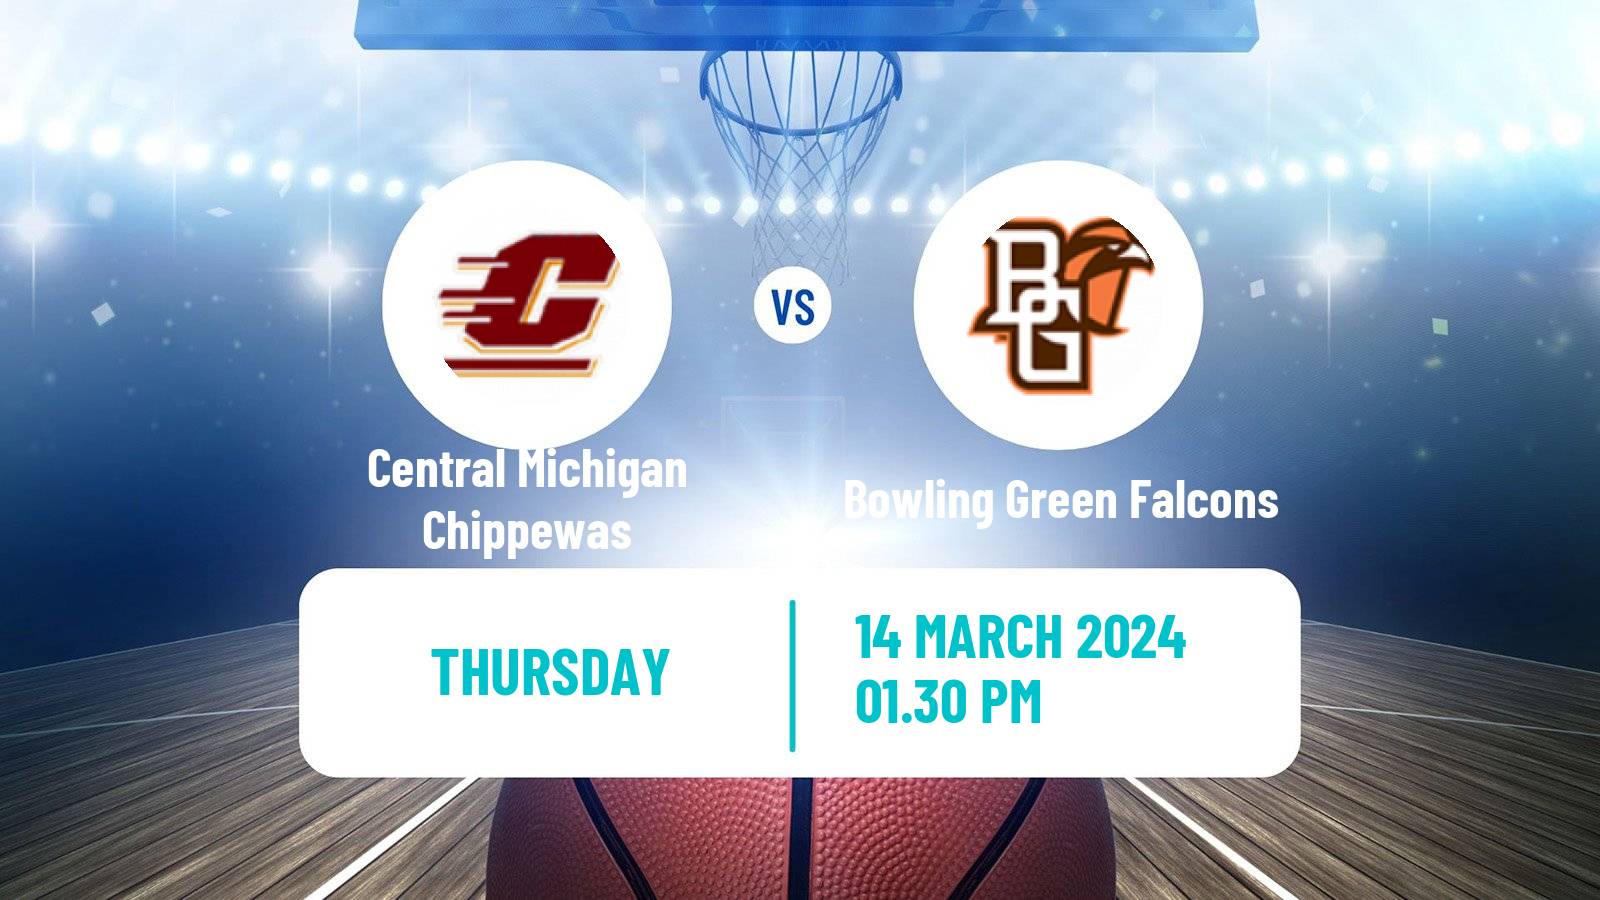 Basketball NCAA College Basketball Central Michigan Chippewas - Bowling Green Falcons